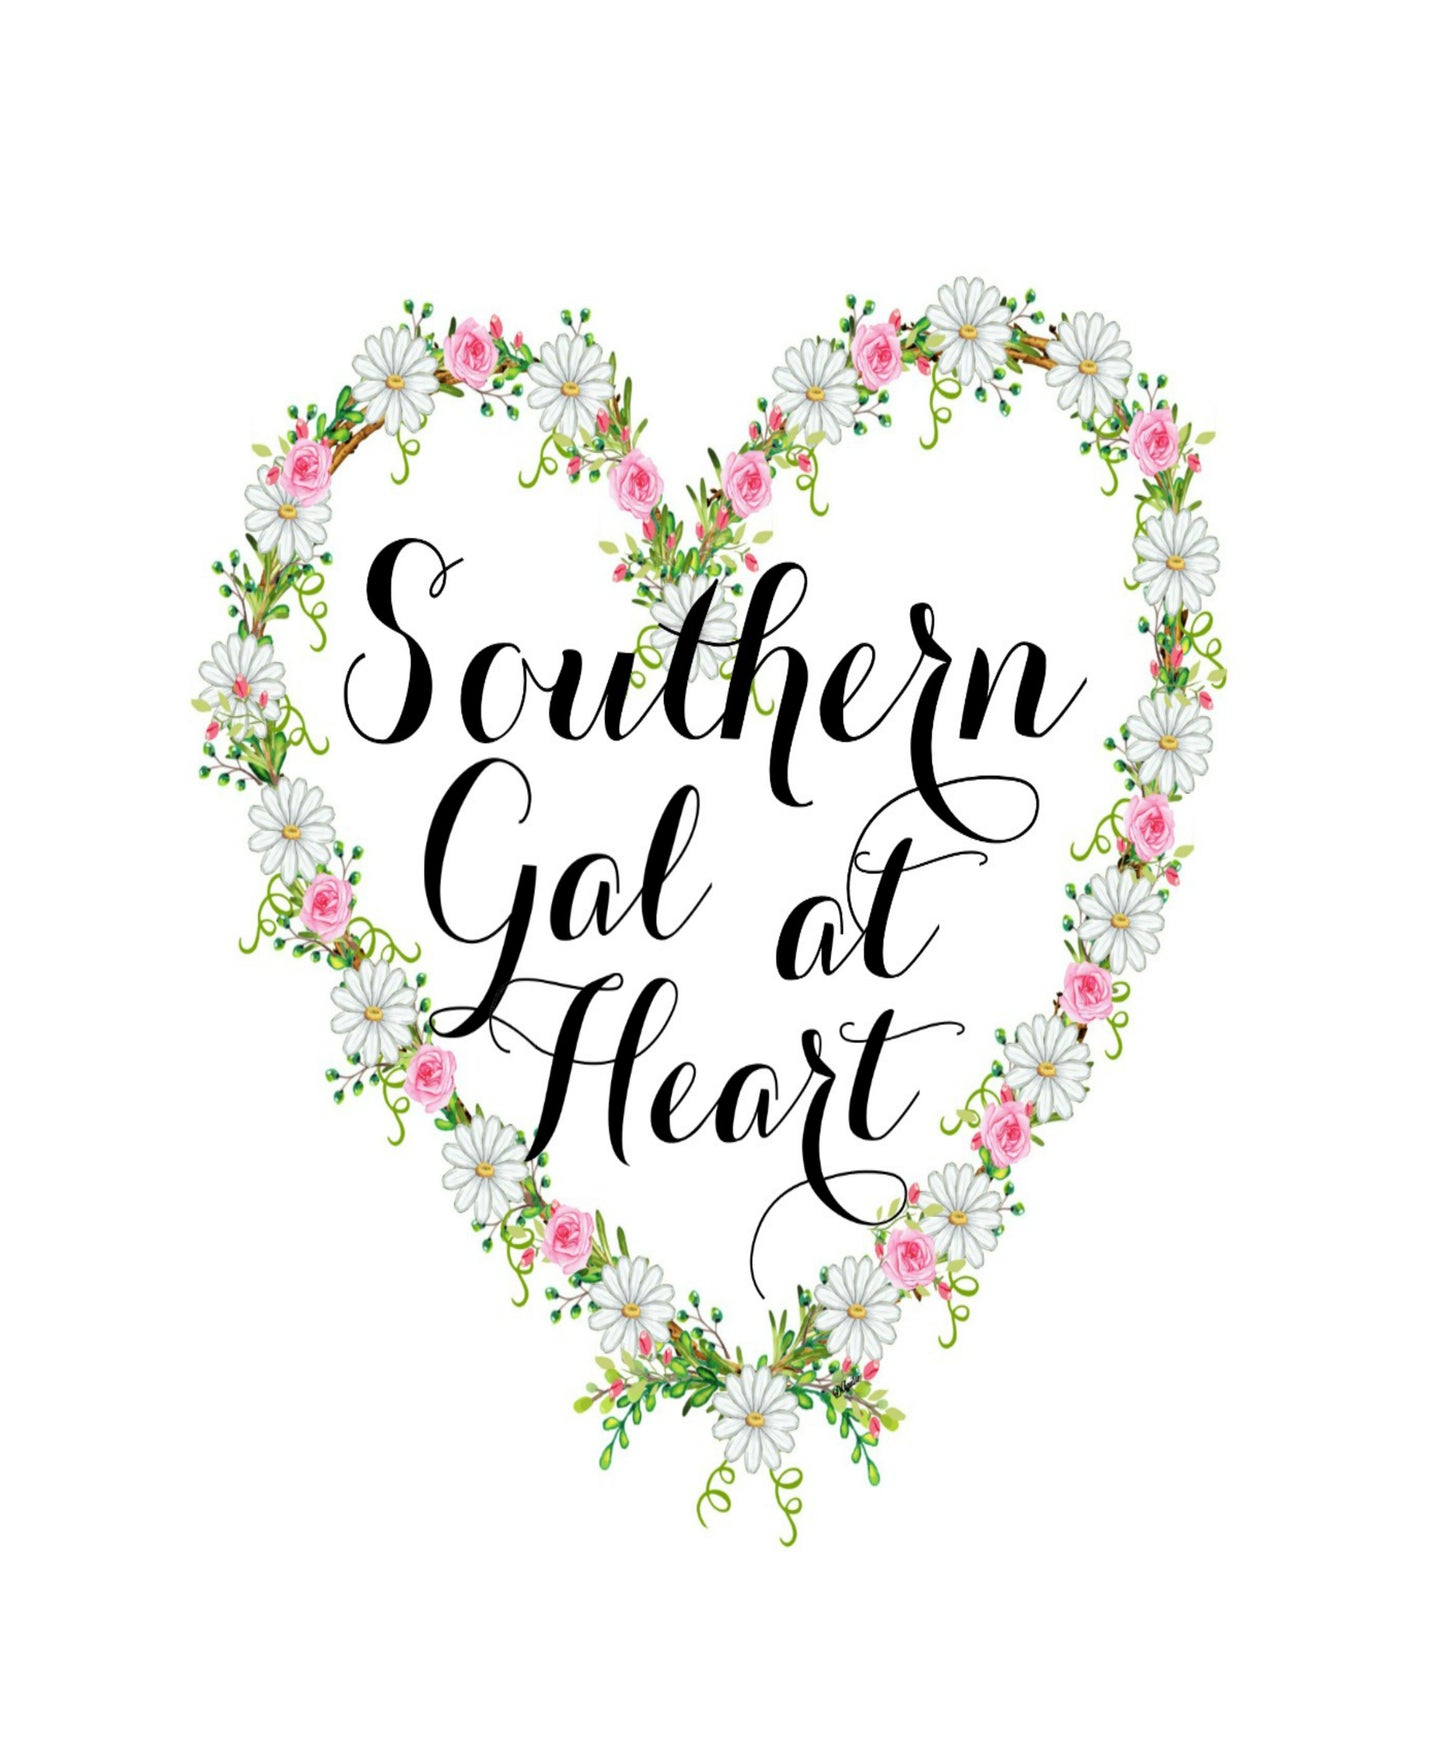 Southern Gal At Heart 8x10 Print Rose & Daisy Garland Heart